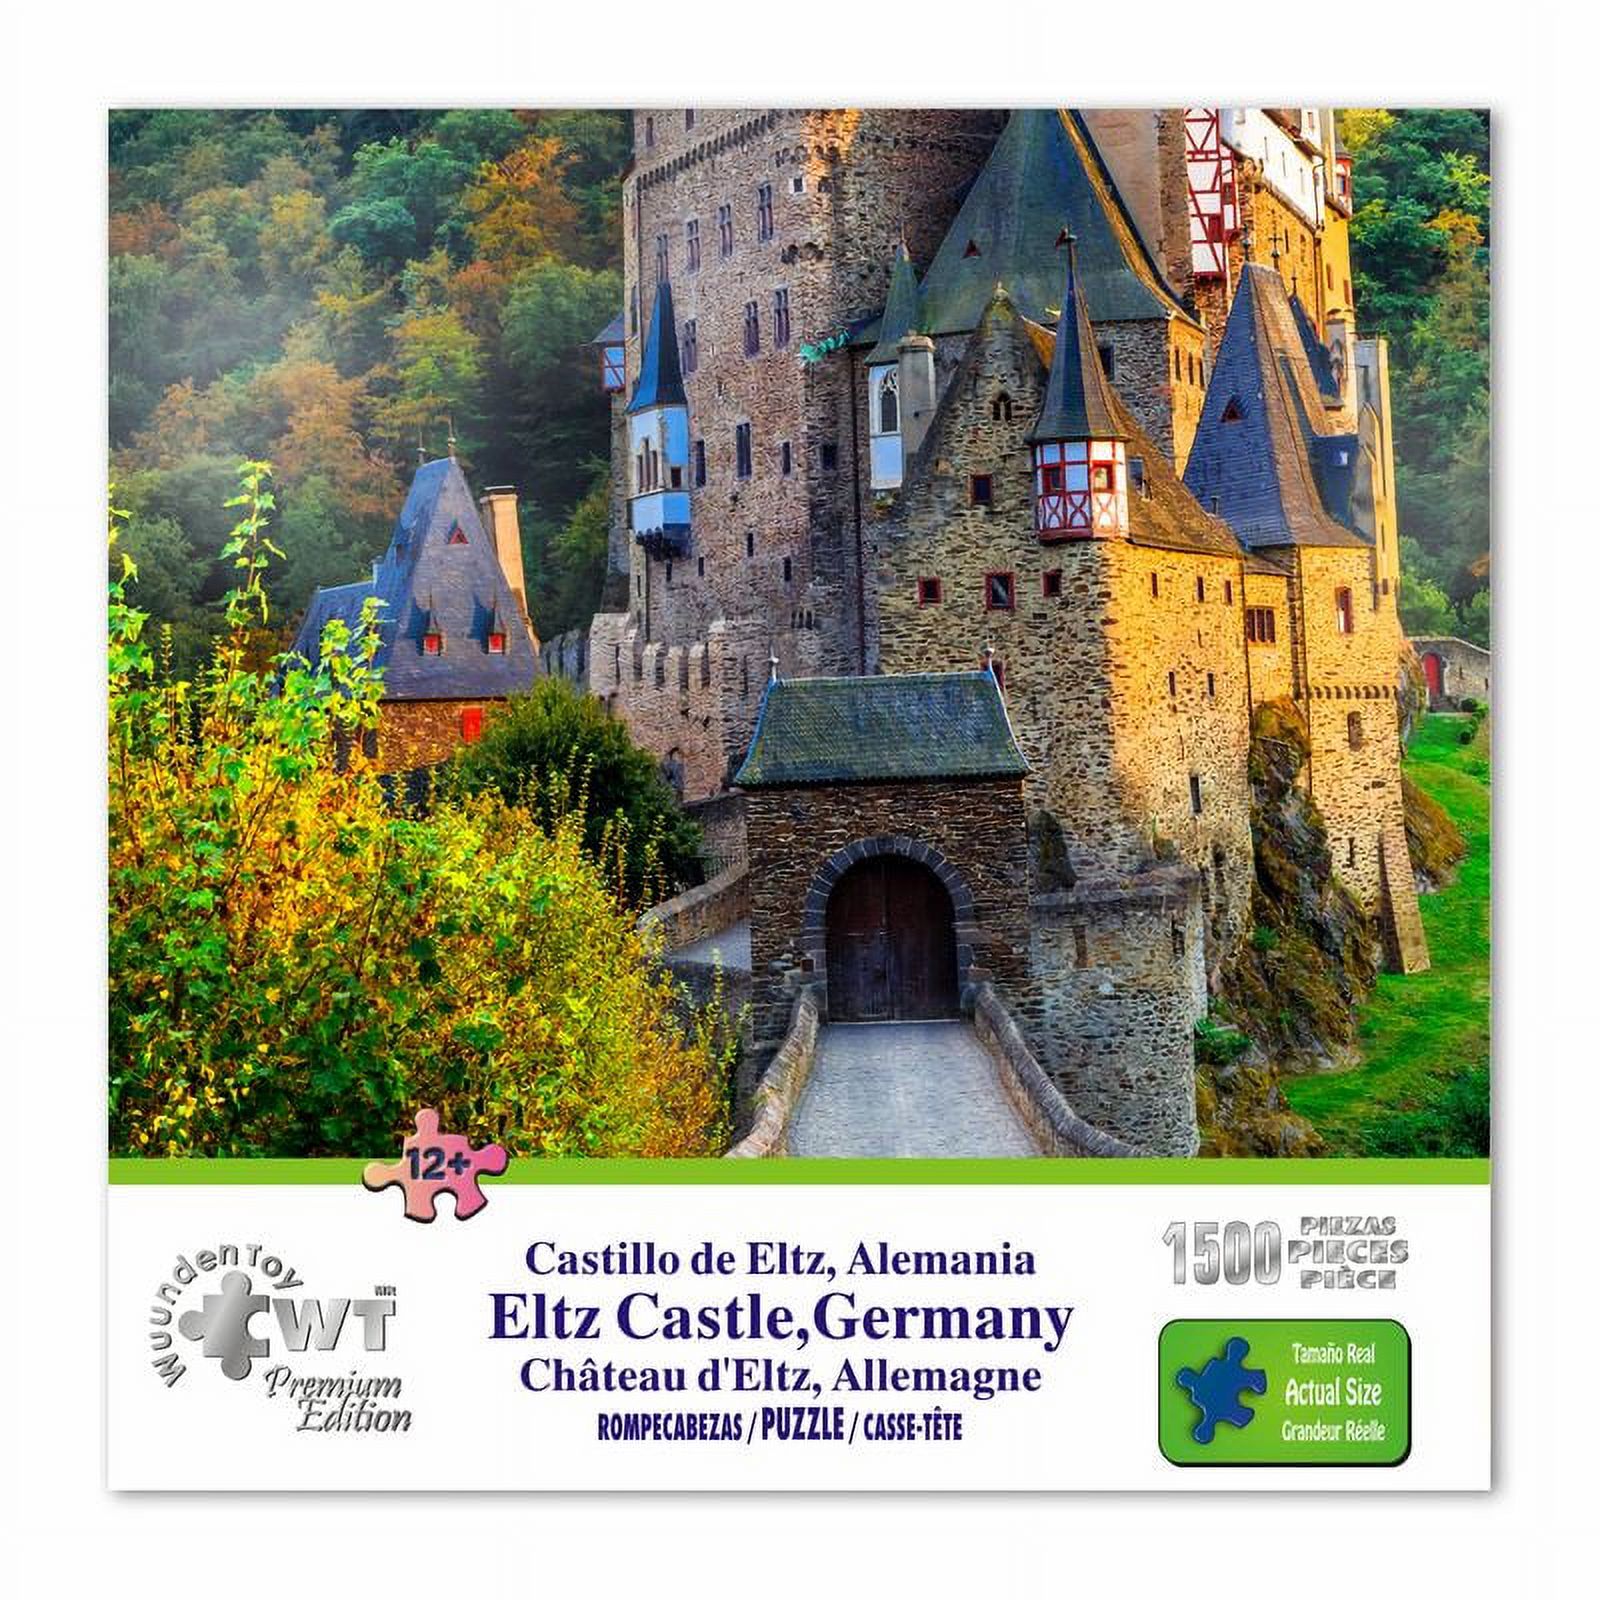 Wuundentoy Premium Editon "Eltz Castle, Germany" 1500 Pieces Jigsaw Puzzle - image 3 of 7